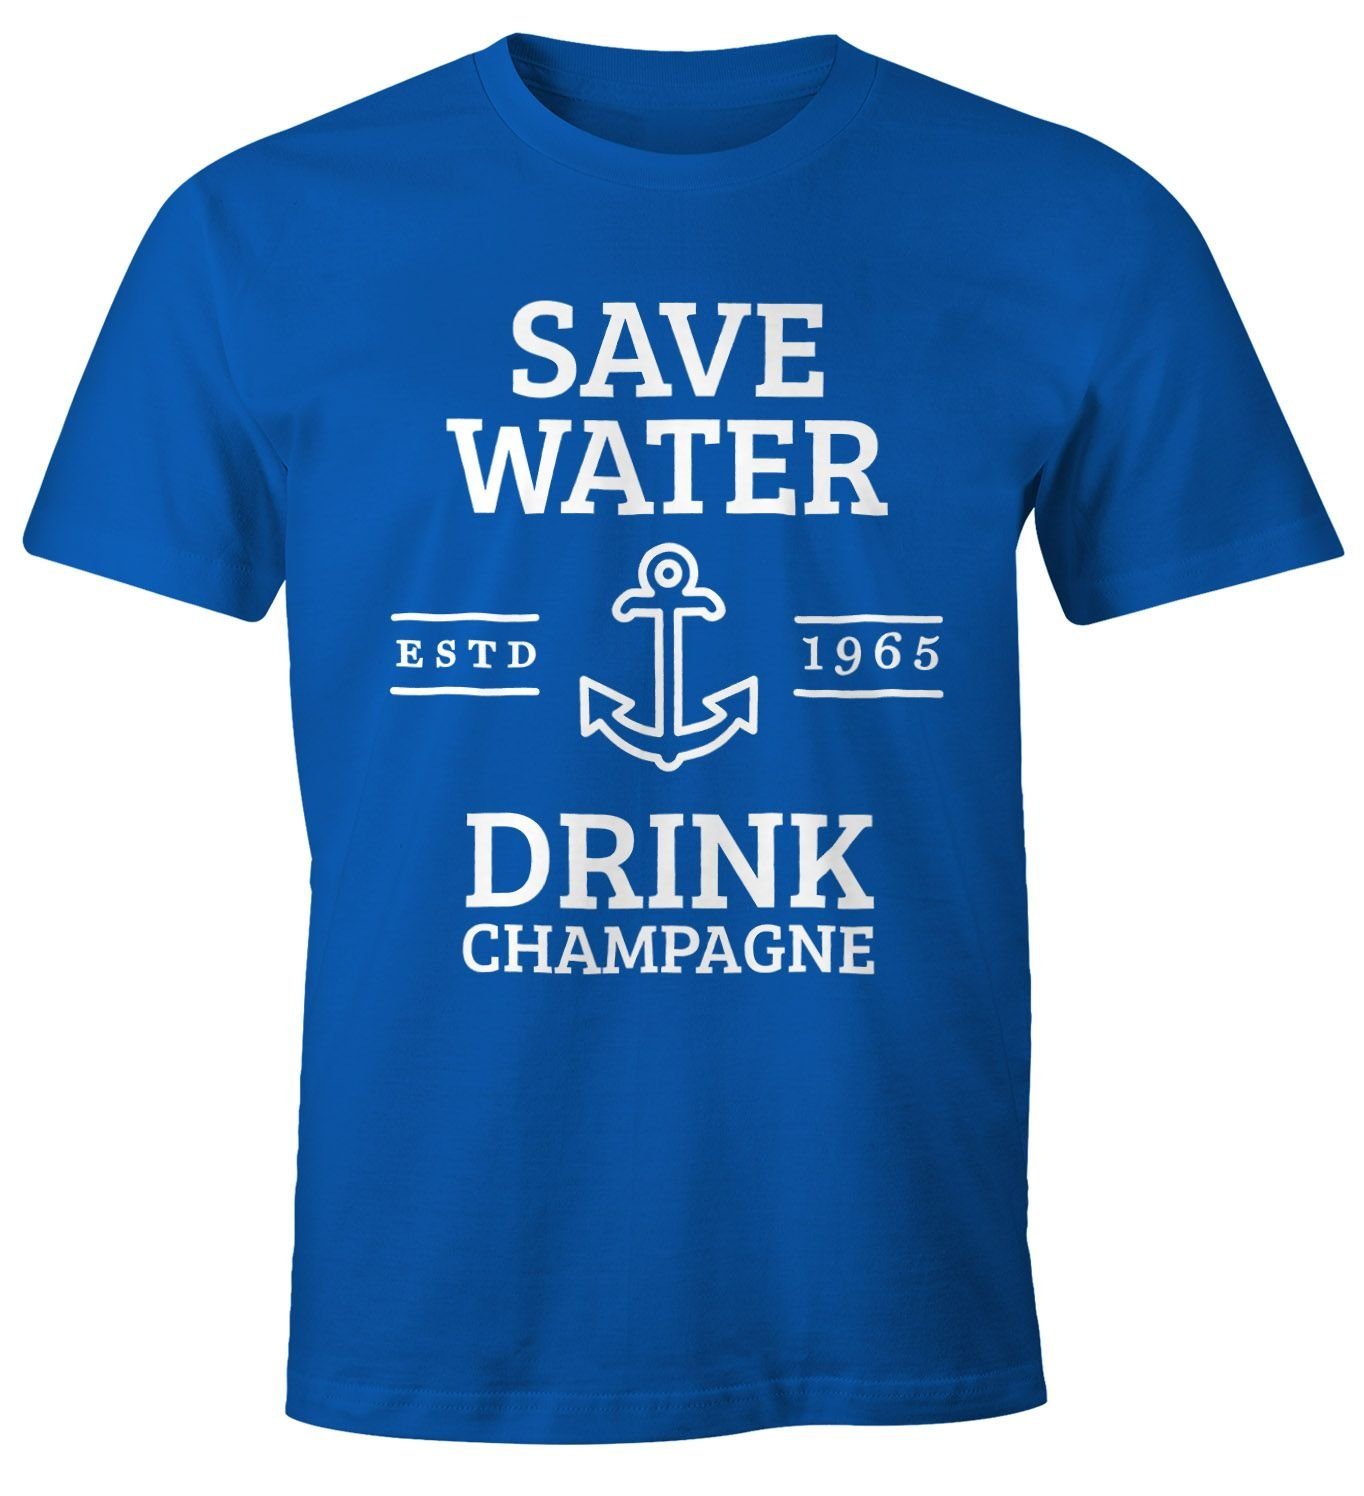 MoonWorks Print-Shirt Fun-Shirt Print blau Champagne Herren water drink Save mit Moonworks® T-Shirt